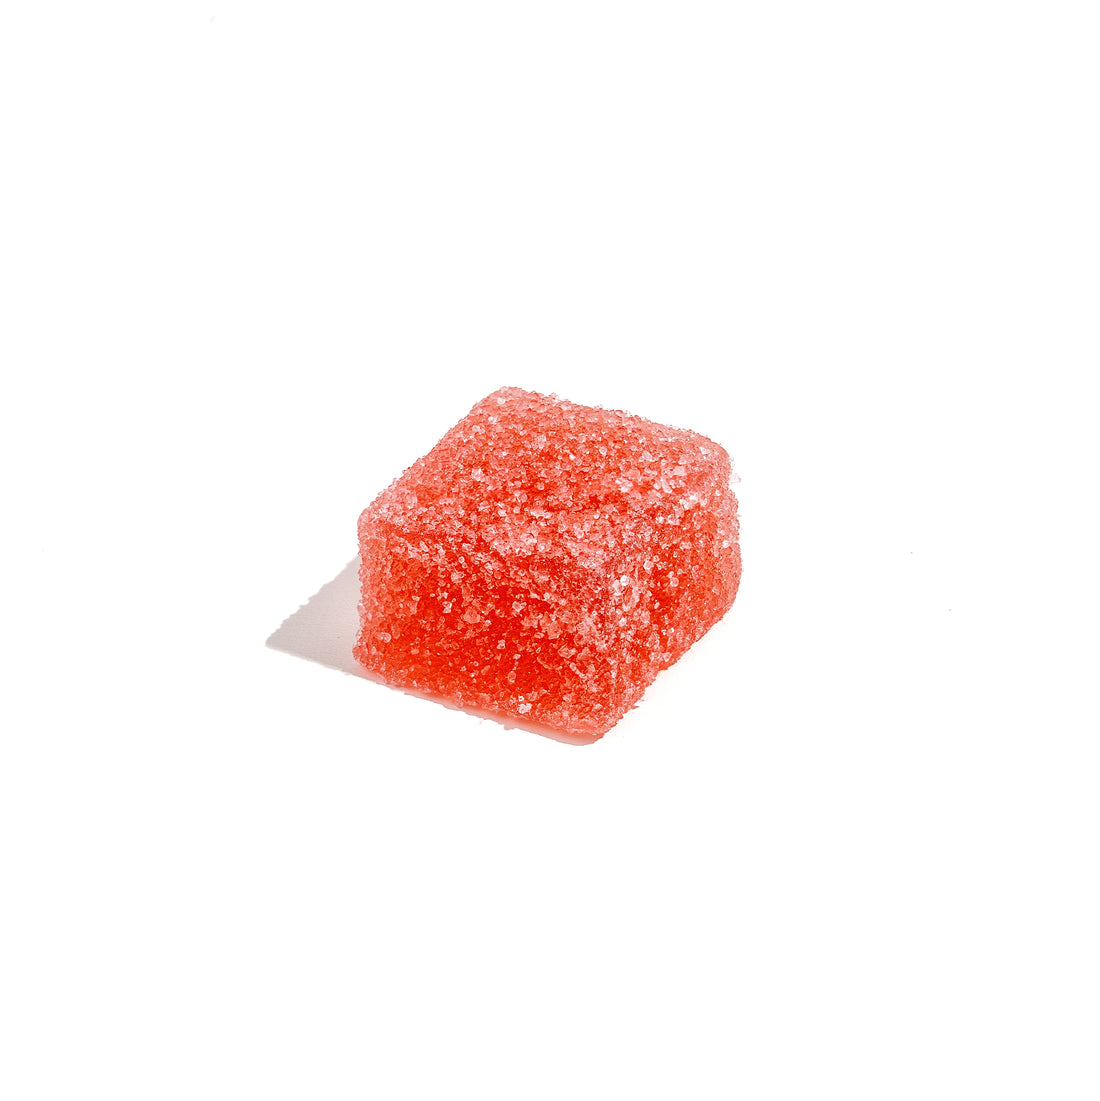 Single Watermelon CBD gummy on a white background